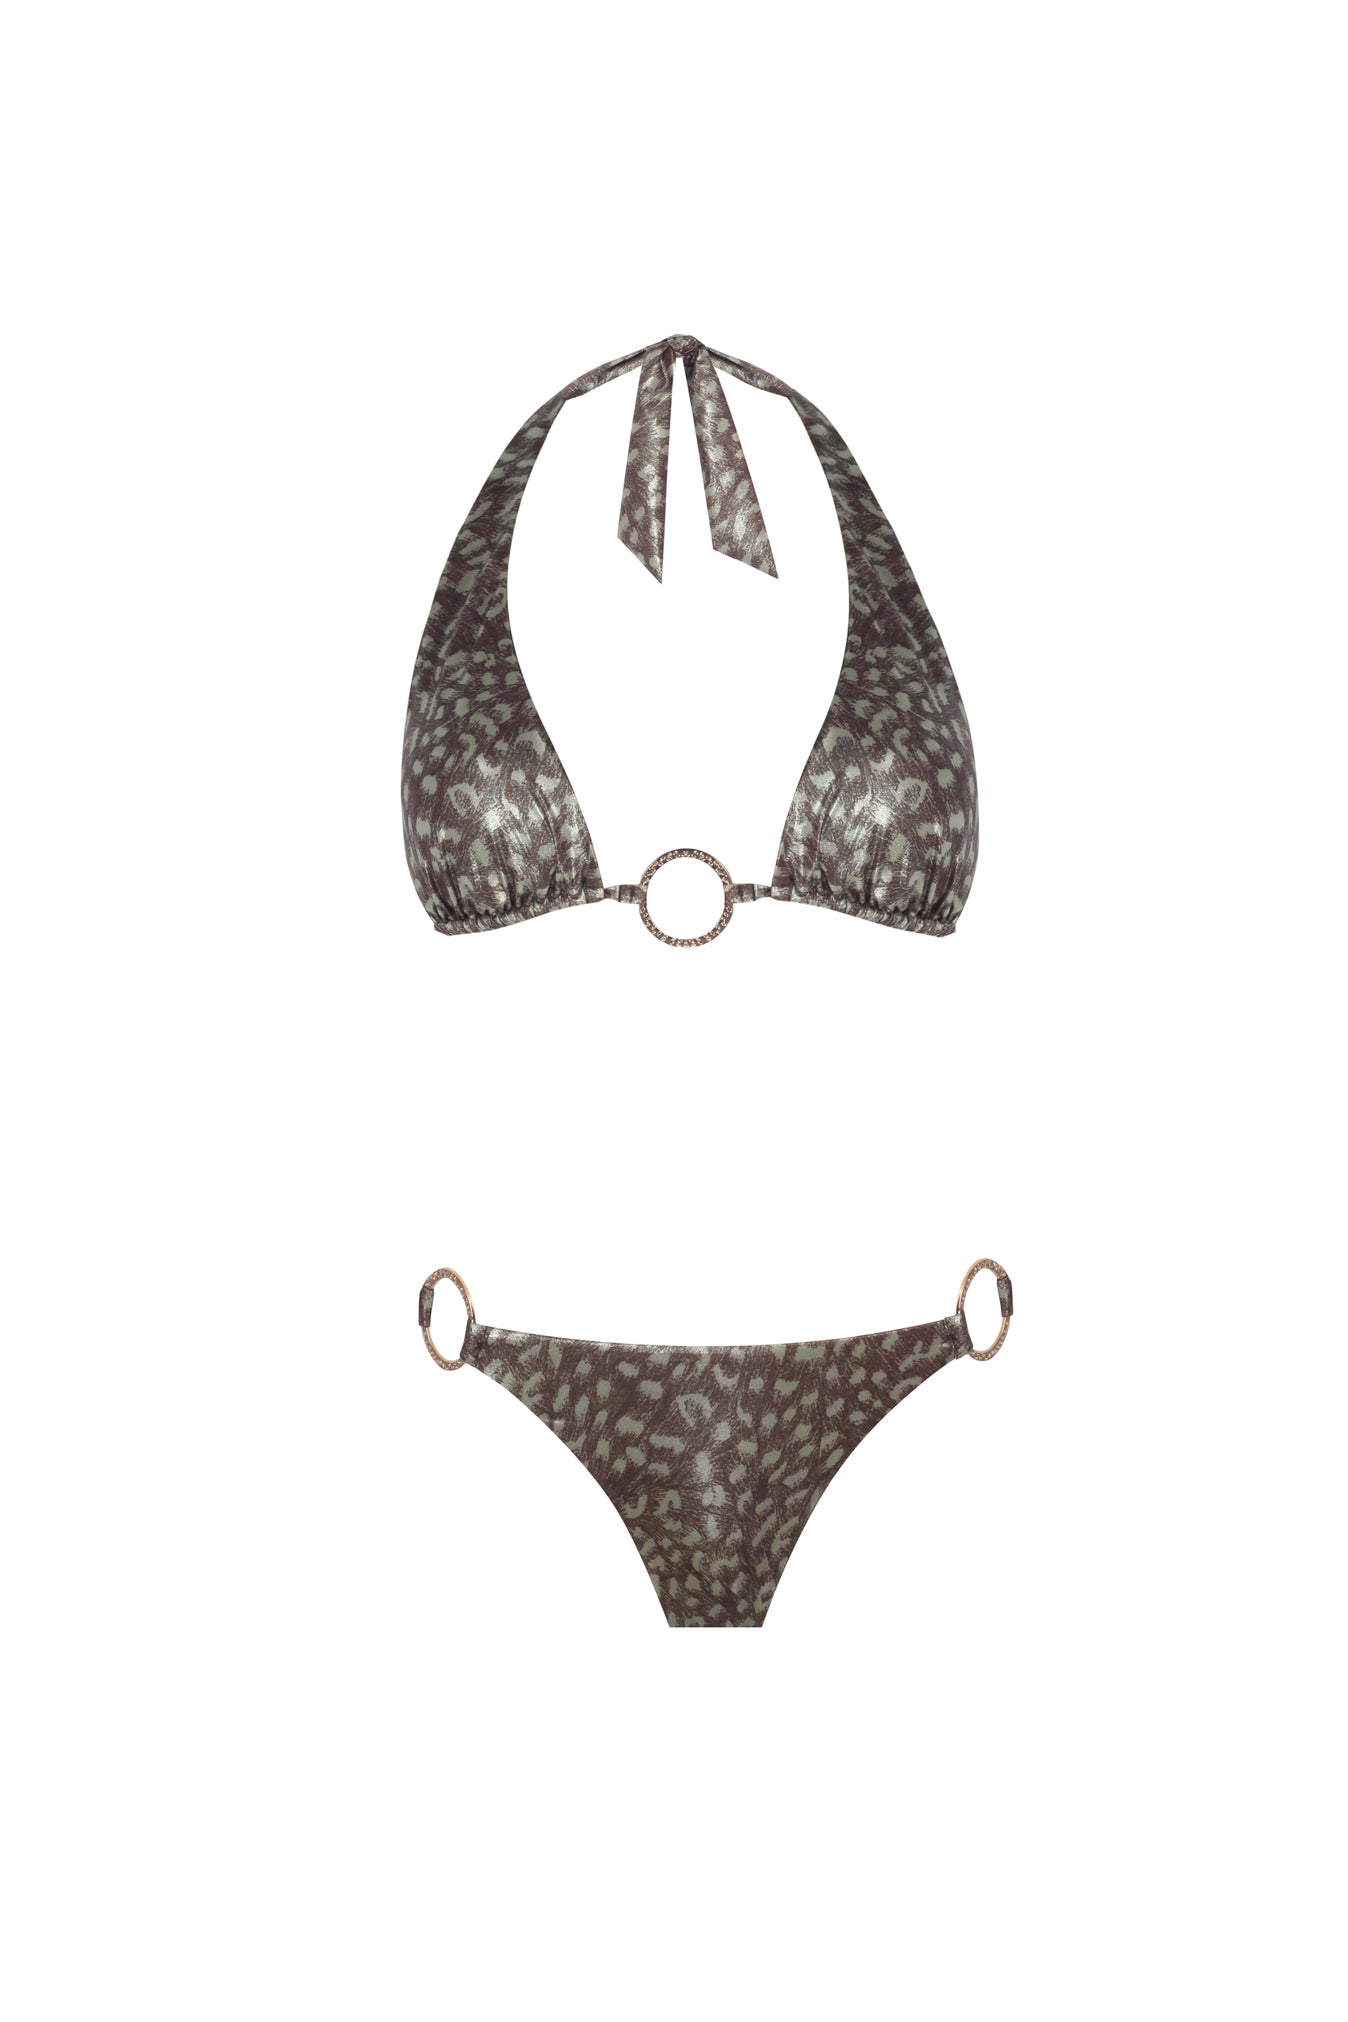 Julie Green Leopard Print Shiny Bikini